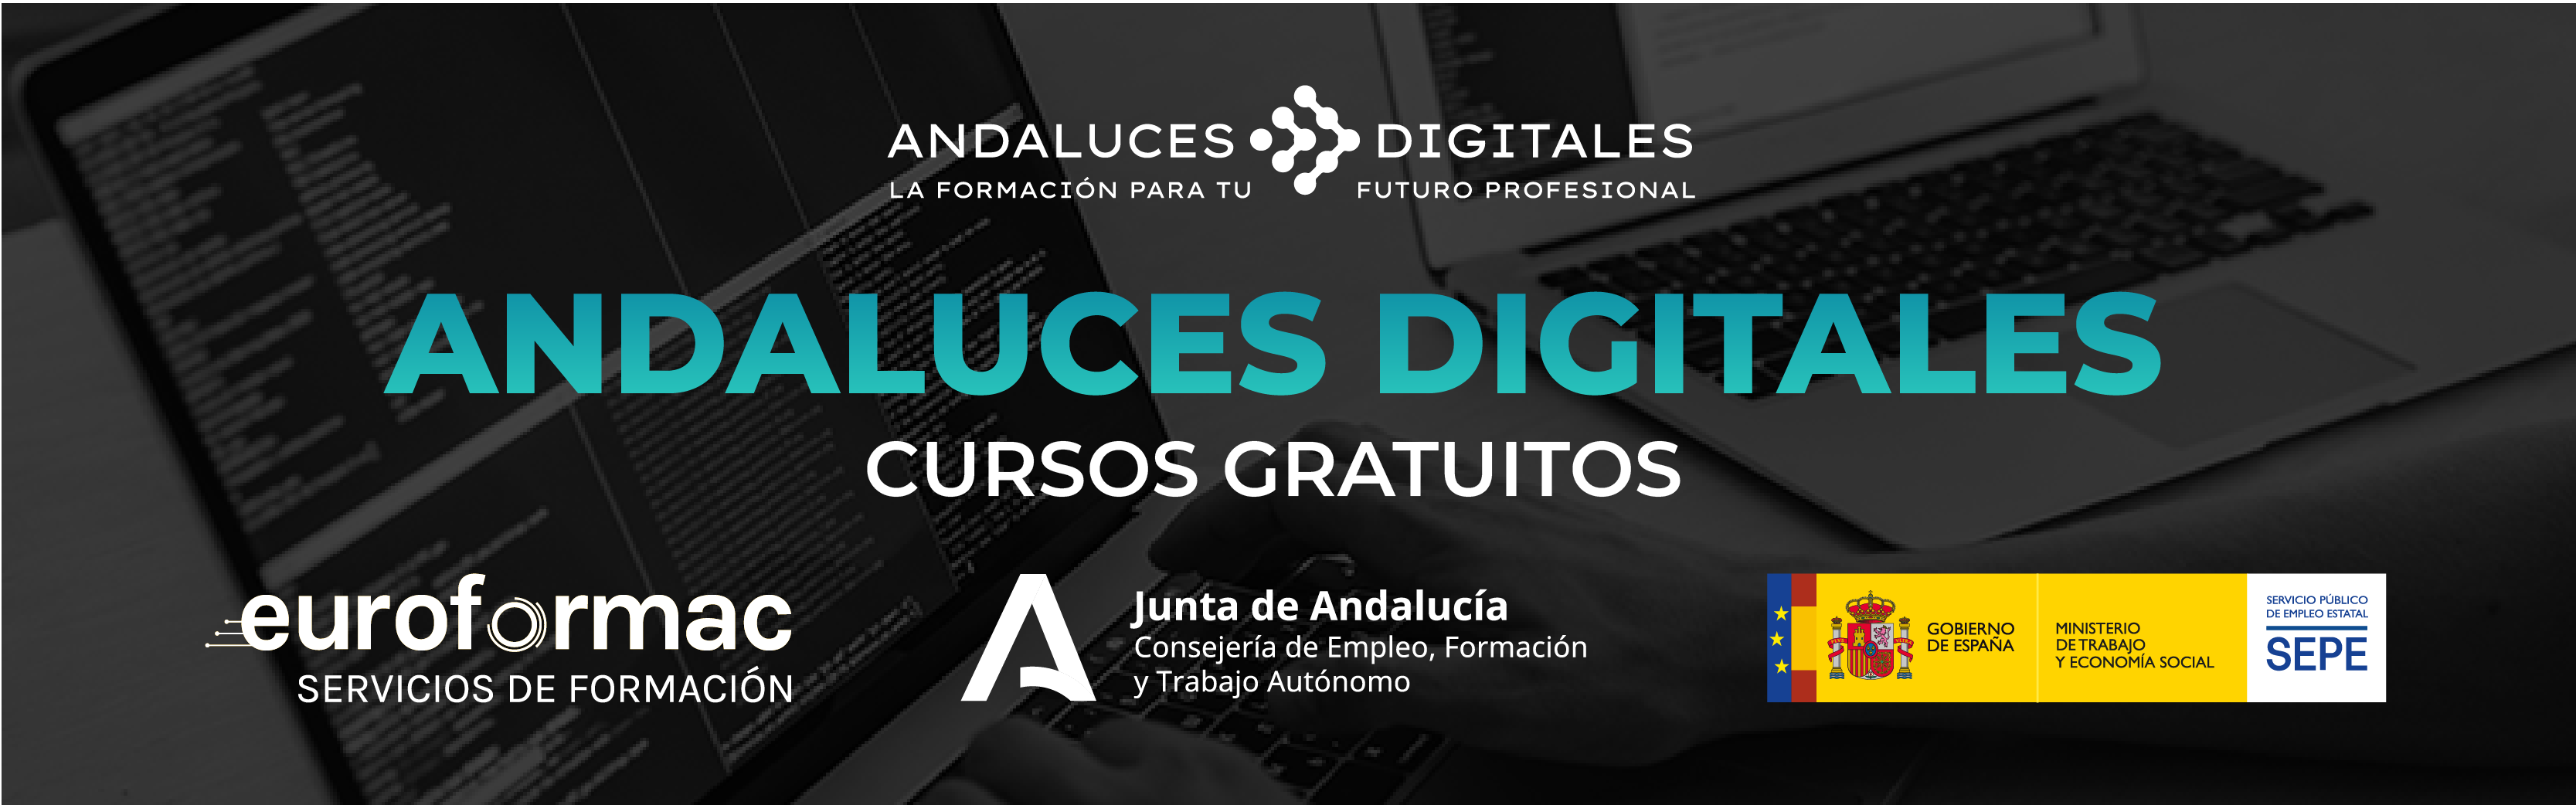 Cursos gratuitos Andaluces Digitales Jaén